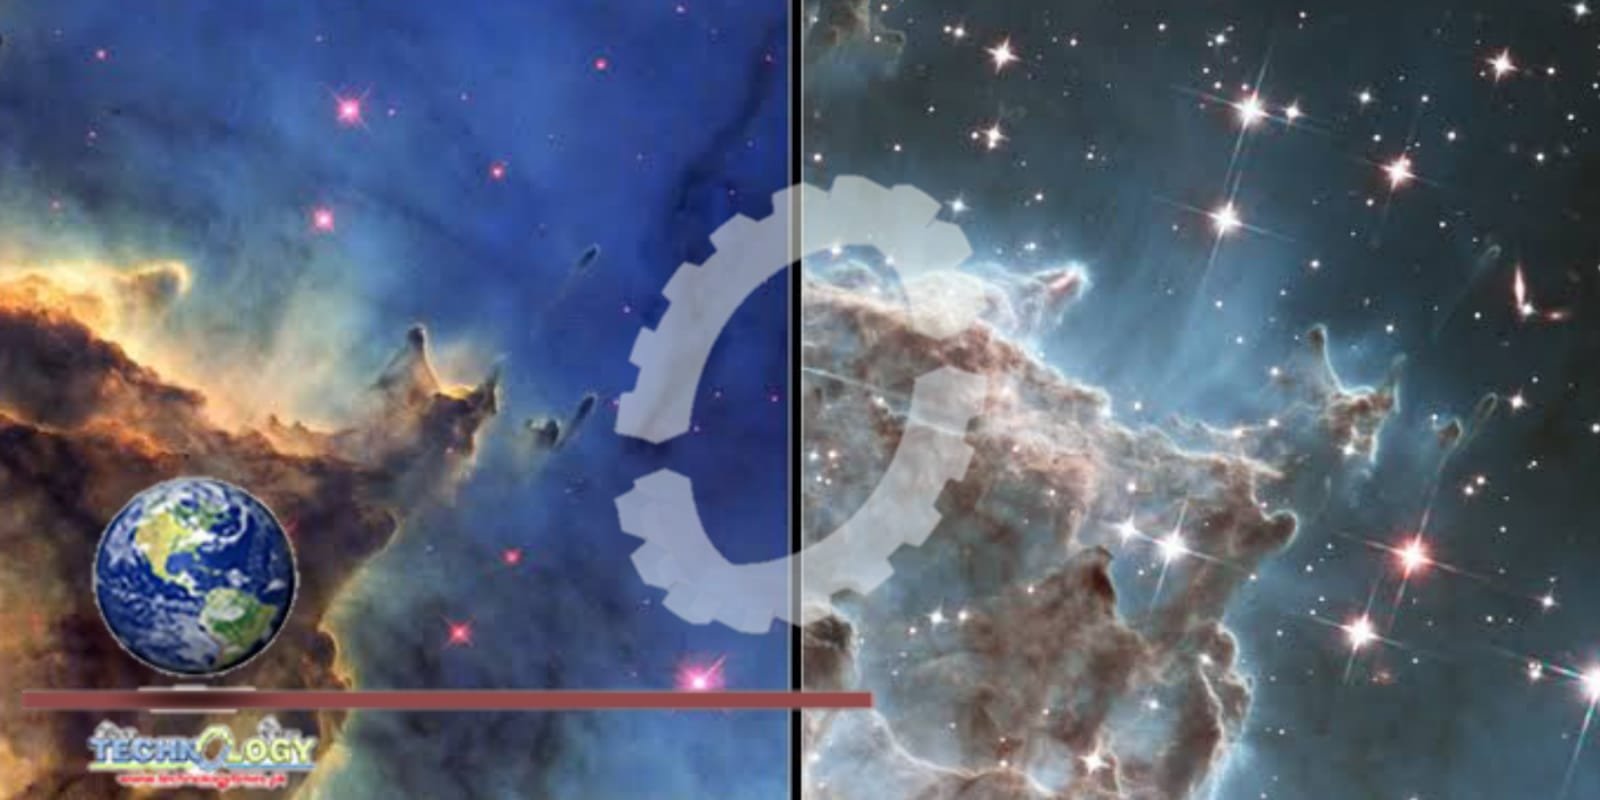 NASA releases brilliant image of star